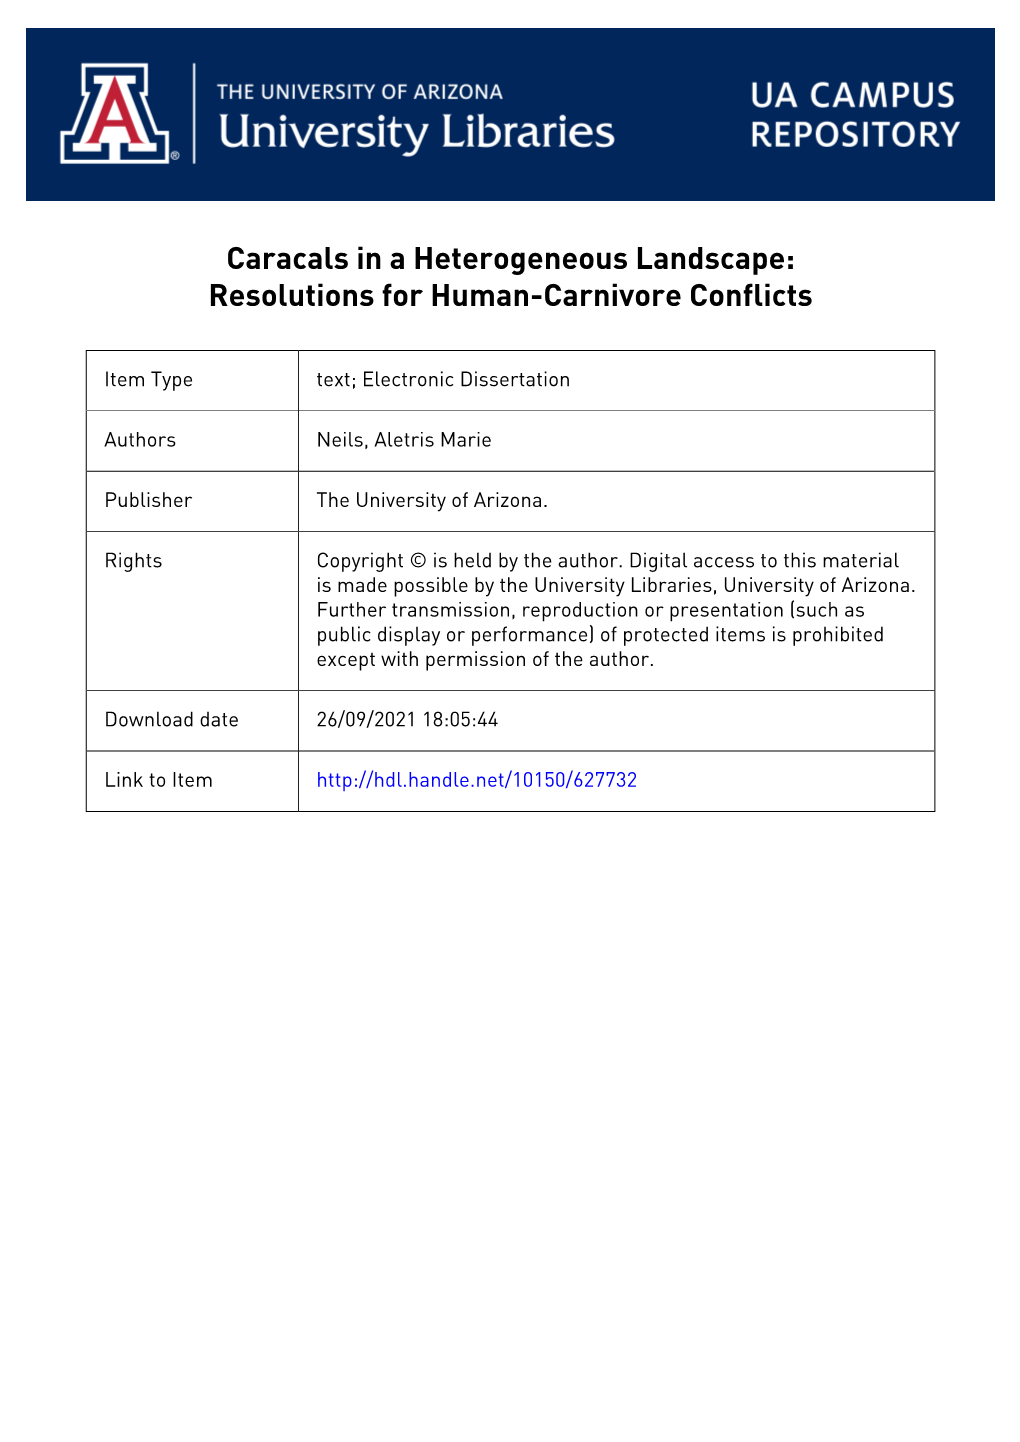 1 Caracals in a Heterogeneous Landscape